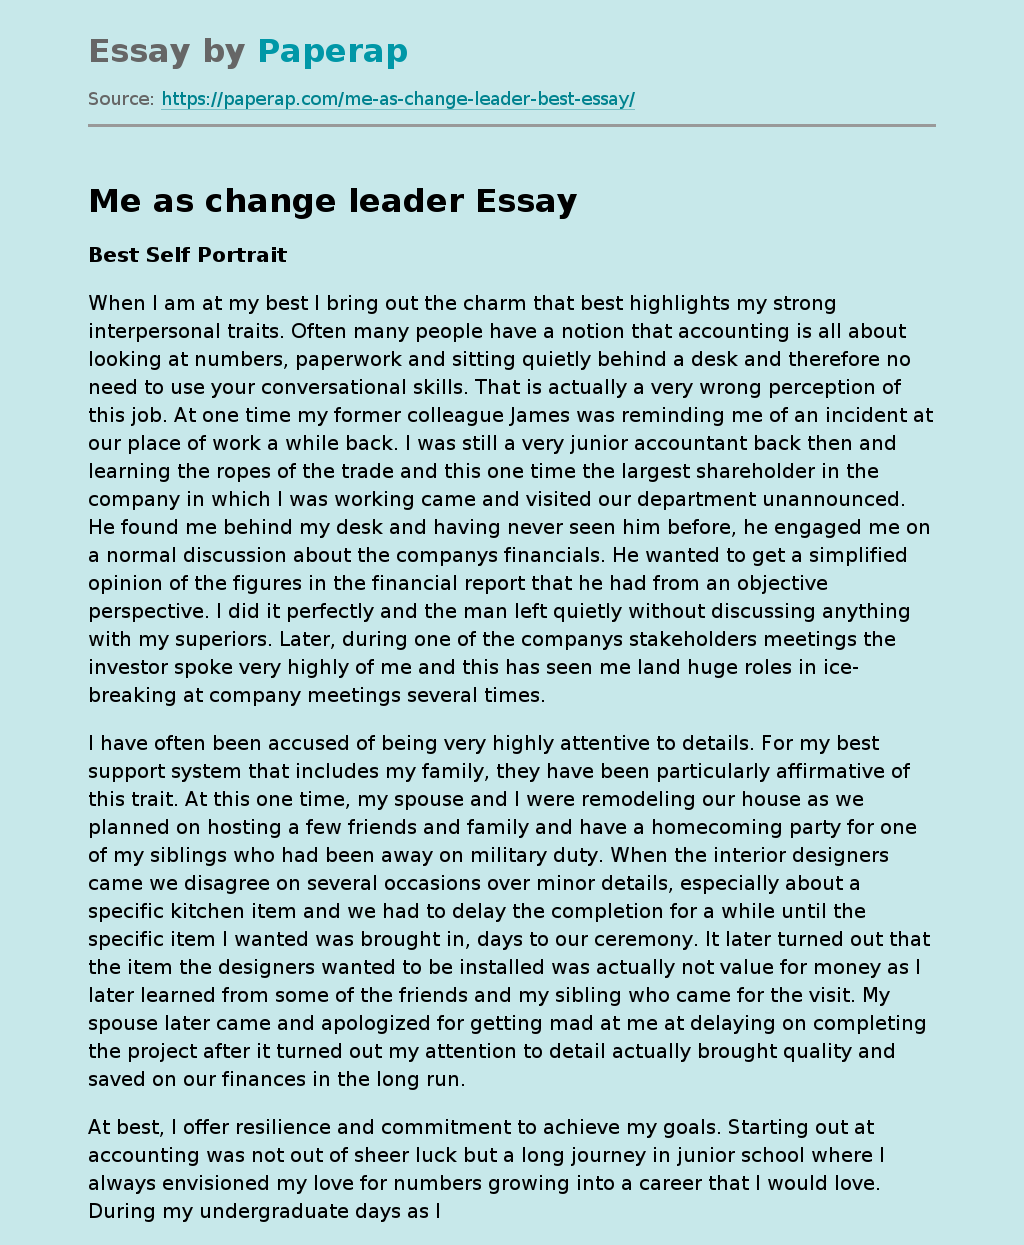 Me as Change Leader